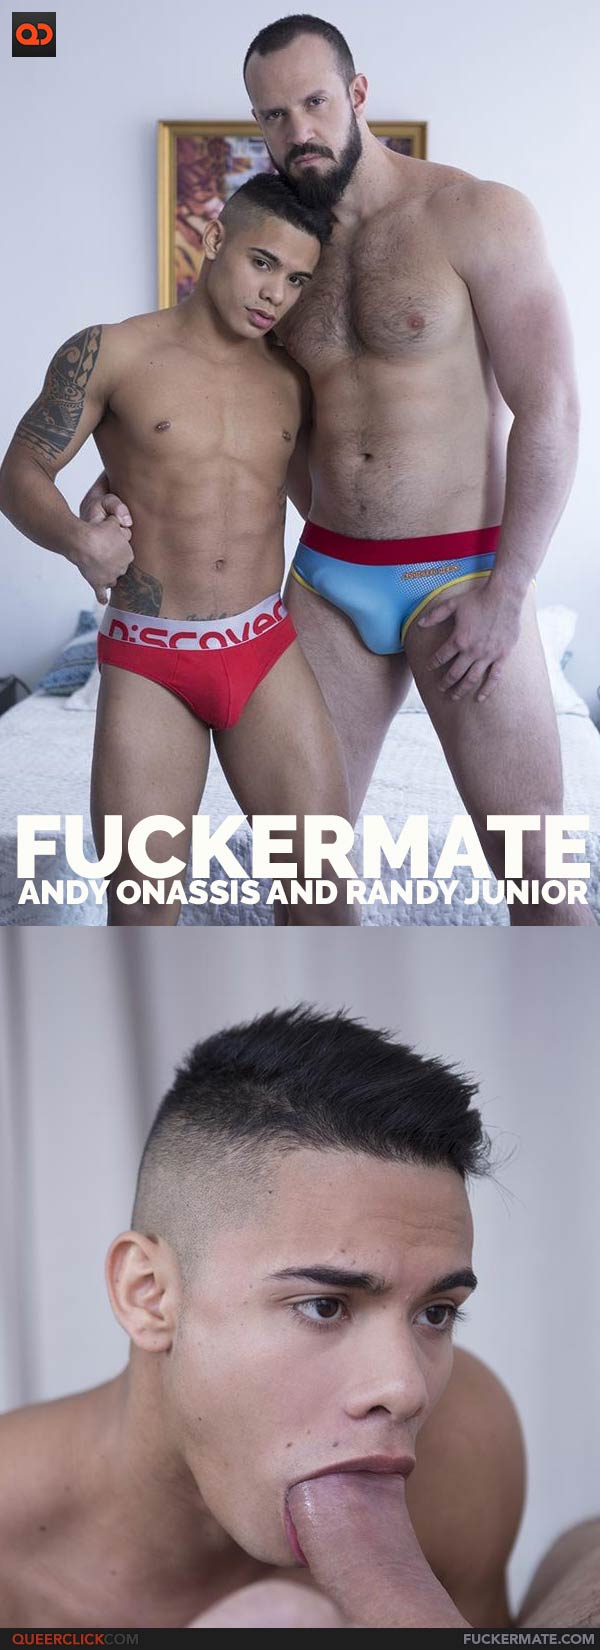 FuckerMate: Andy Onassis and Randy Junior